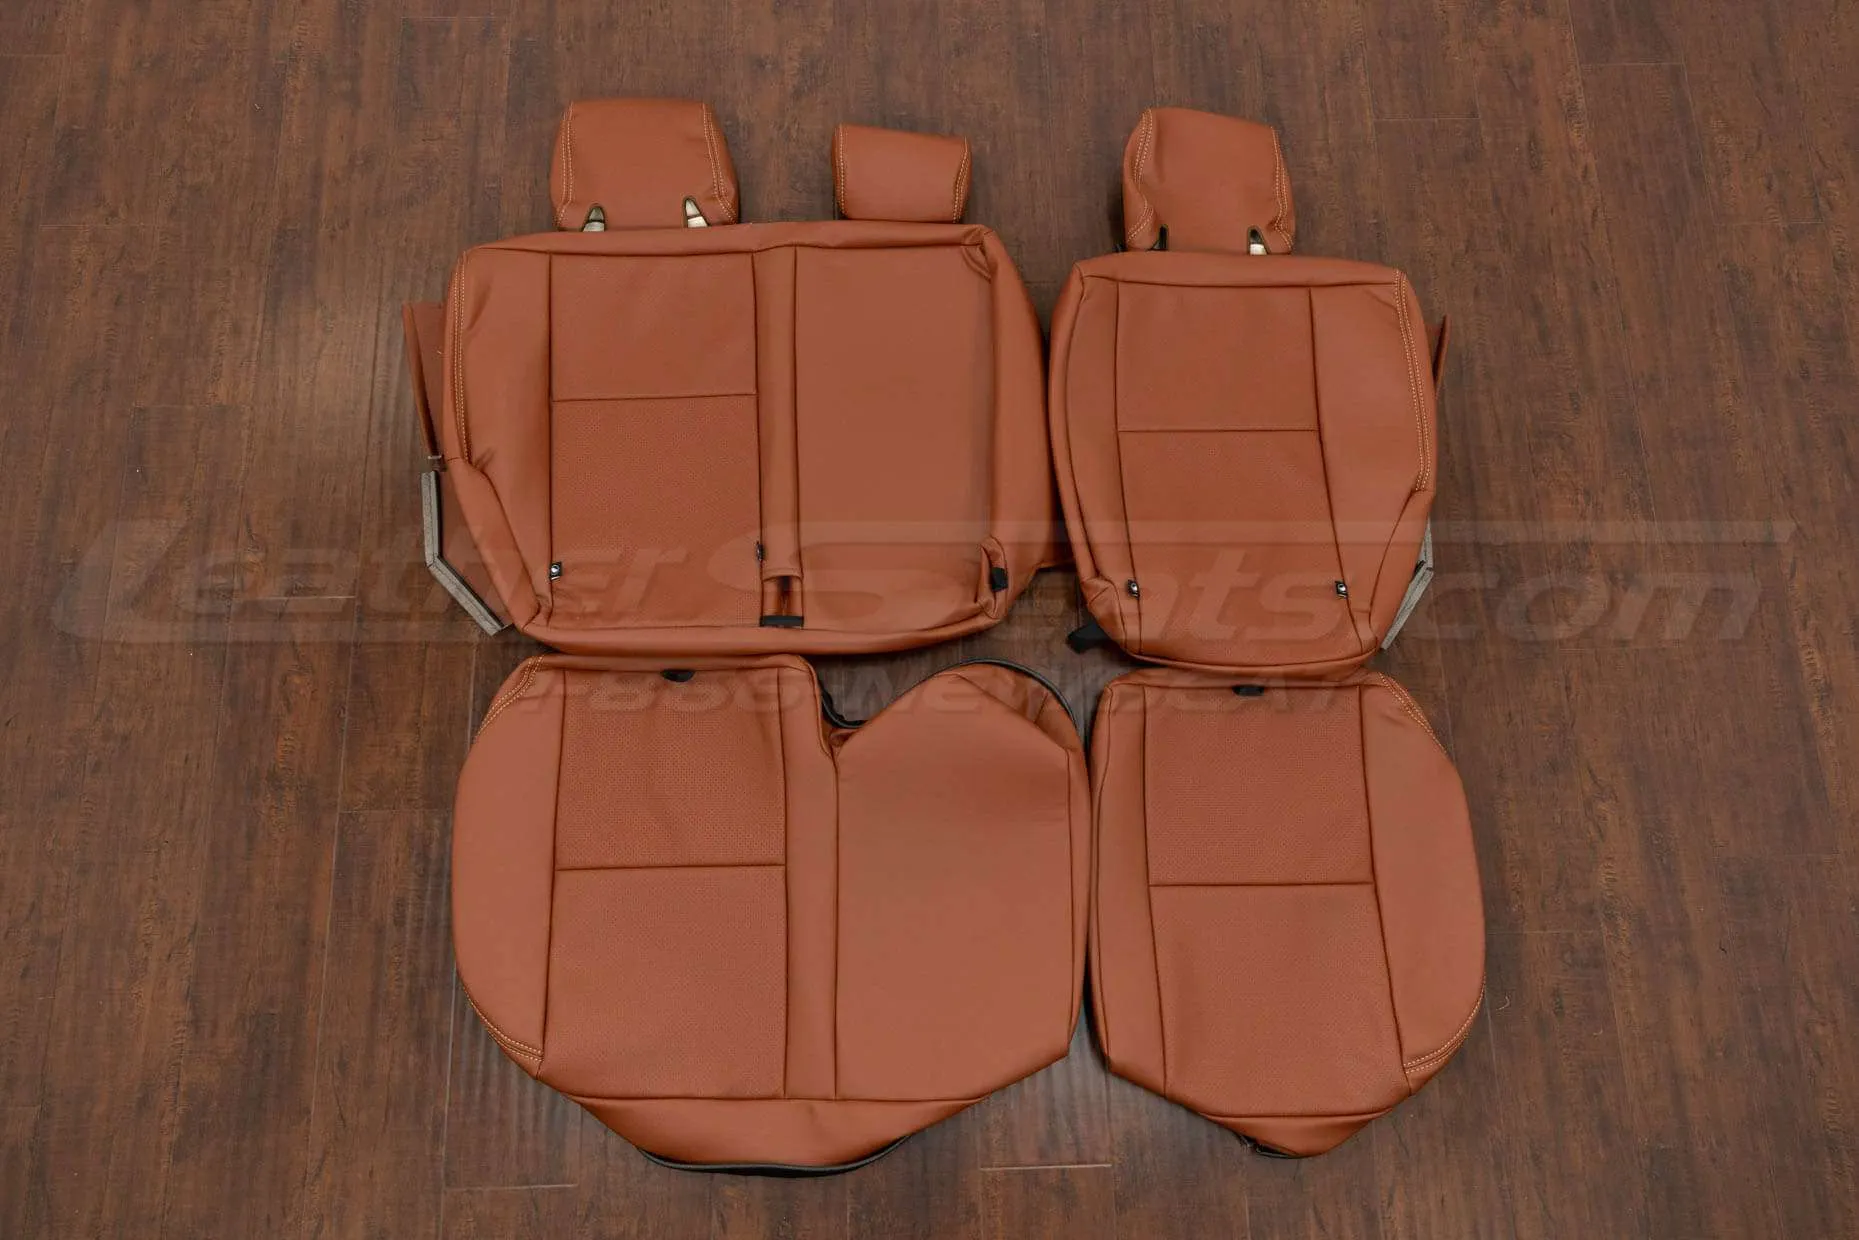 2014 Toyota FJ Cruiser Leather Seats - Mitt Brown - Rear seat upholstery